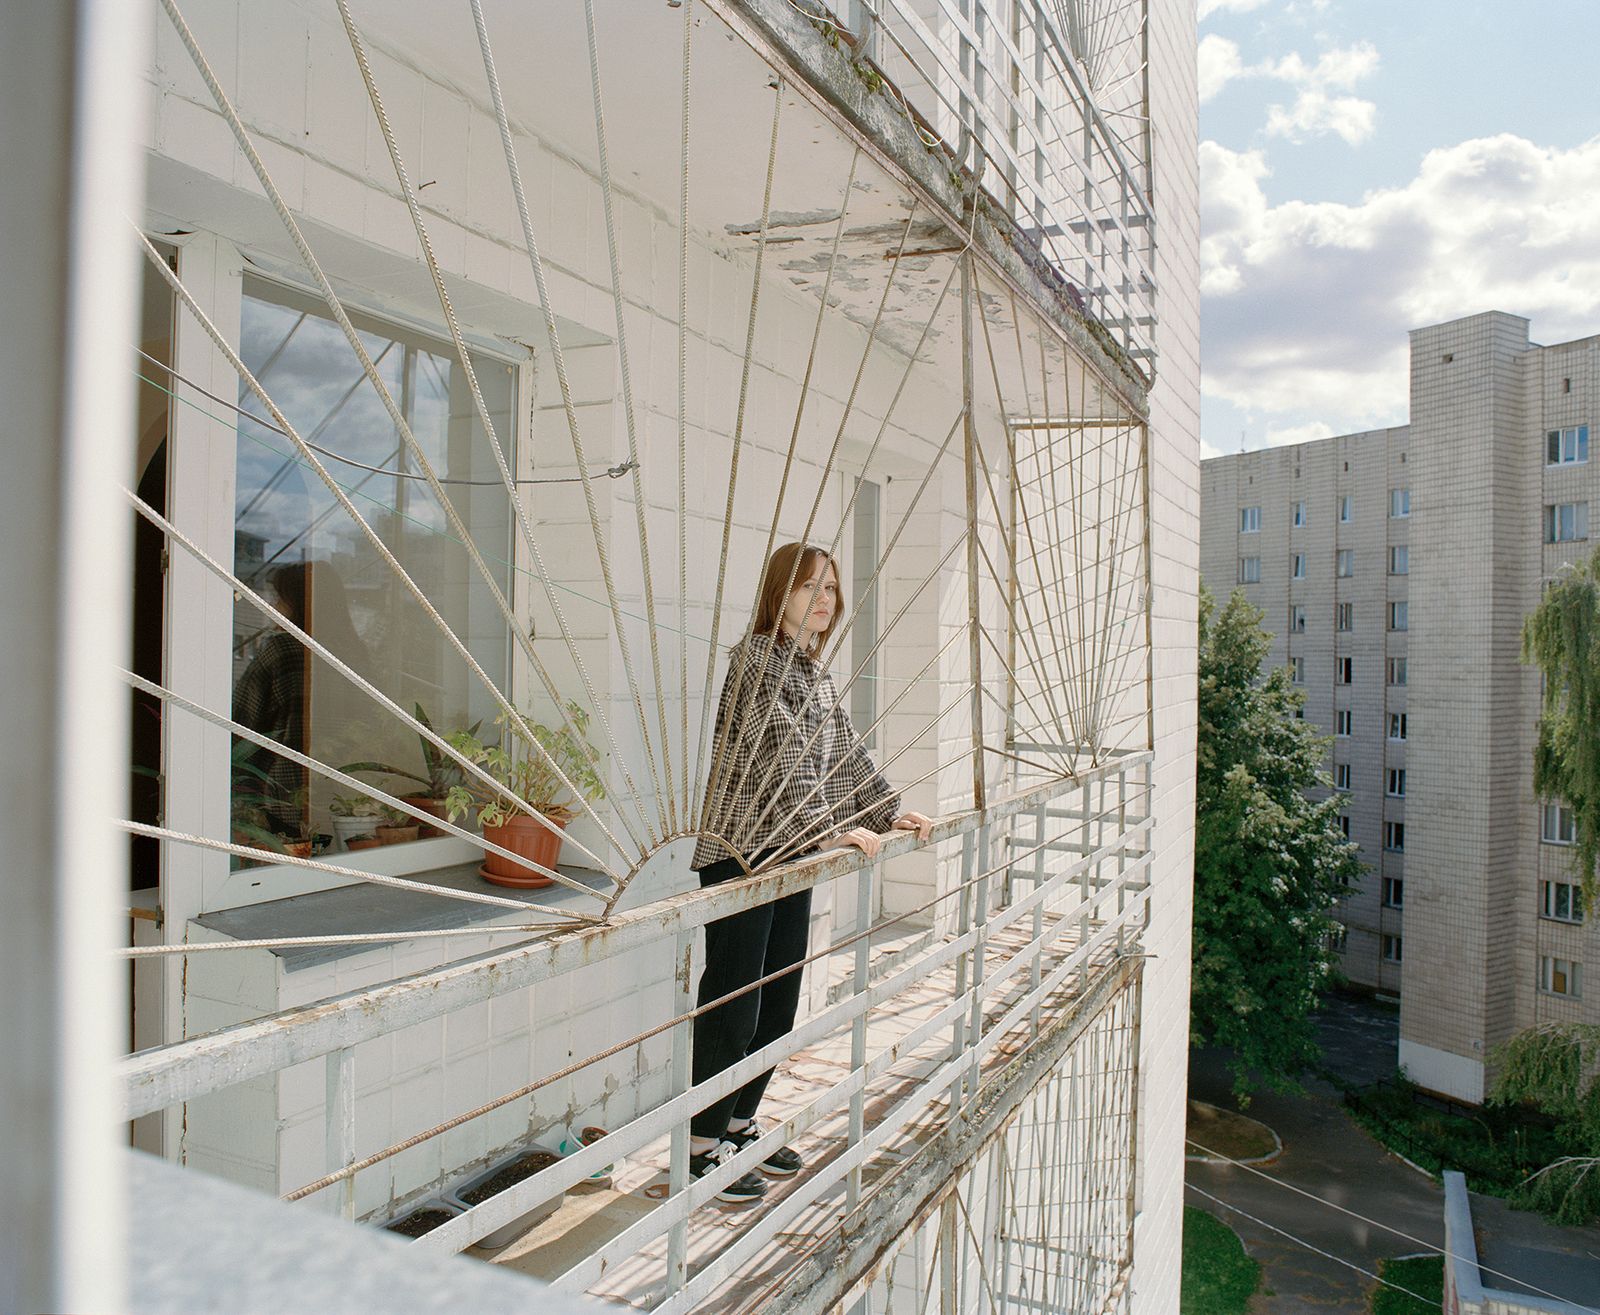 © Daria Svertilova - Image from the Temporary Homes photography project